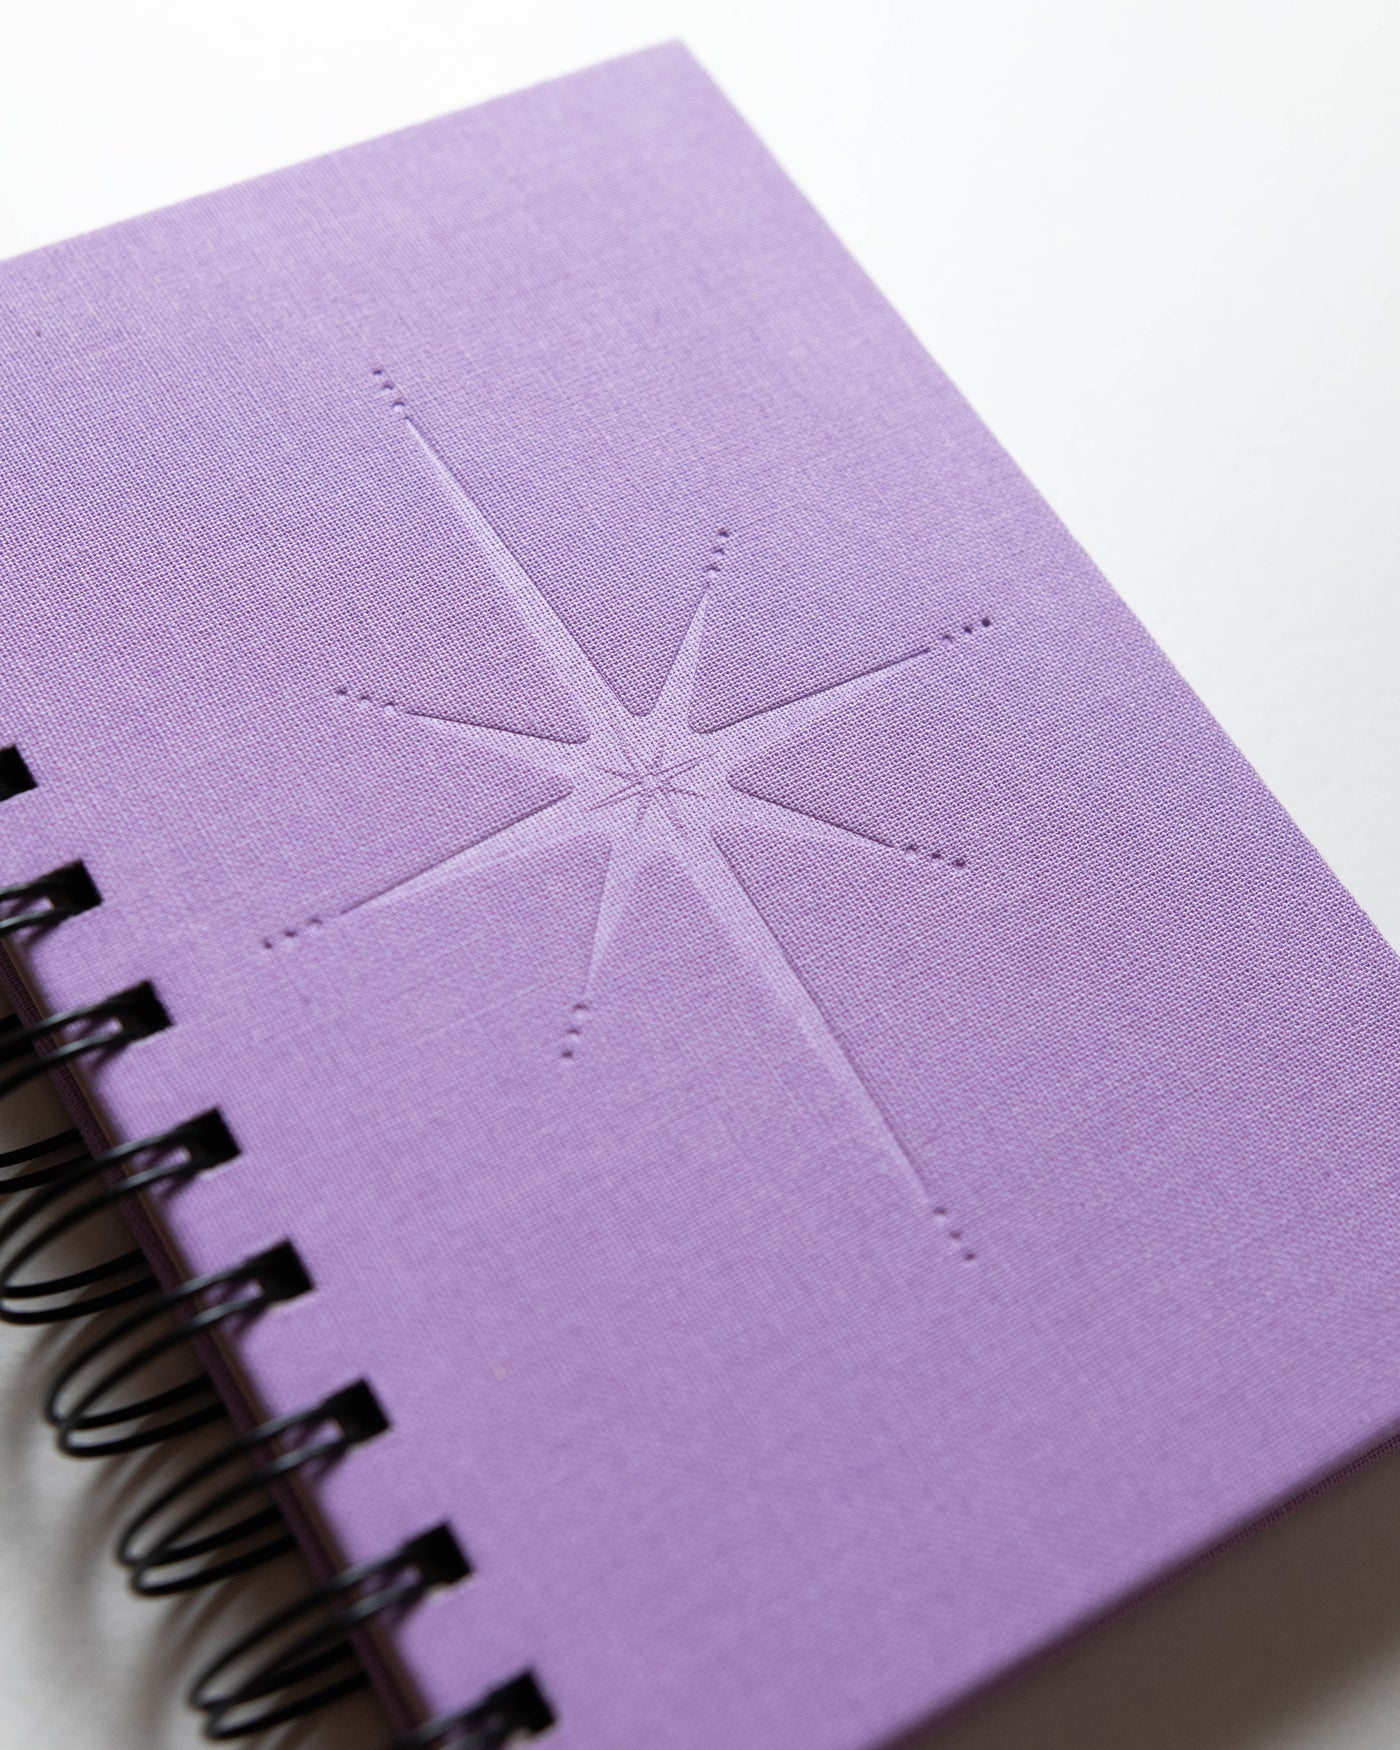 The Star Spiral Bound Notebook - Wholesale